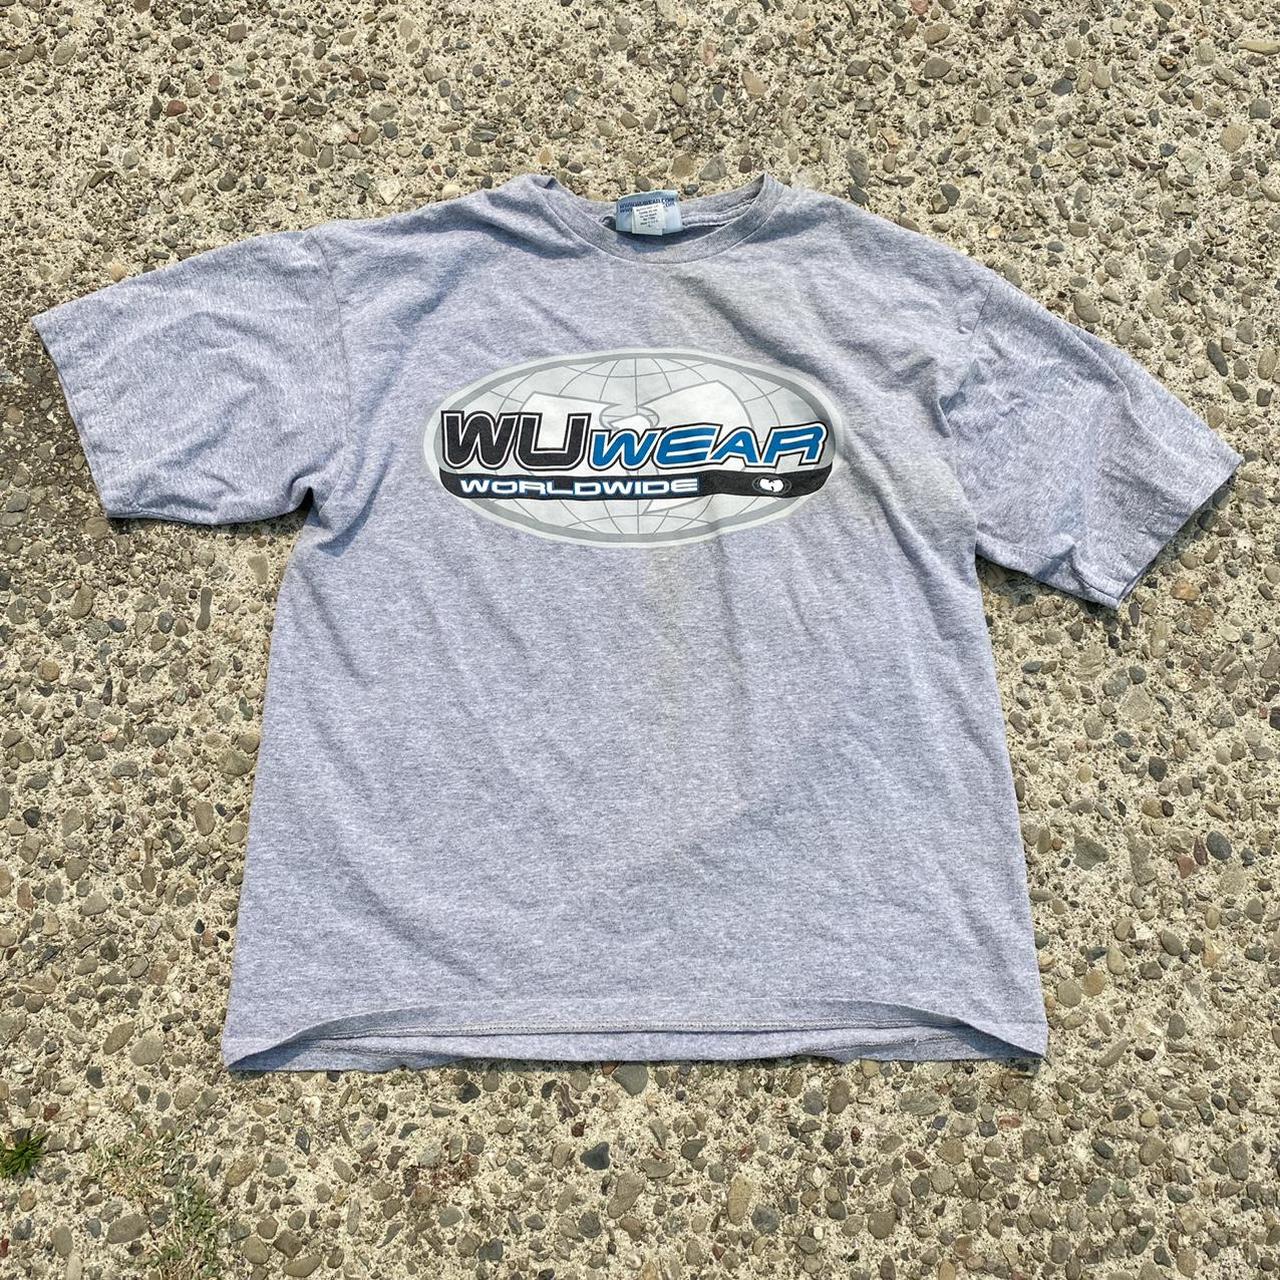 Wu Wear Men's Grey and Blue T-shirt | Depop